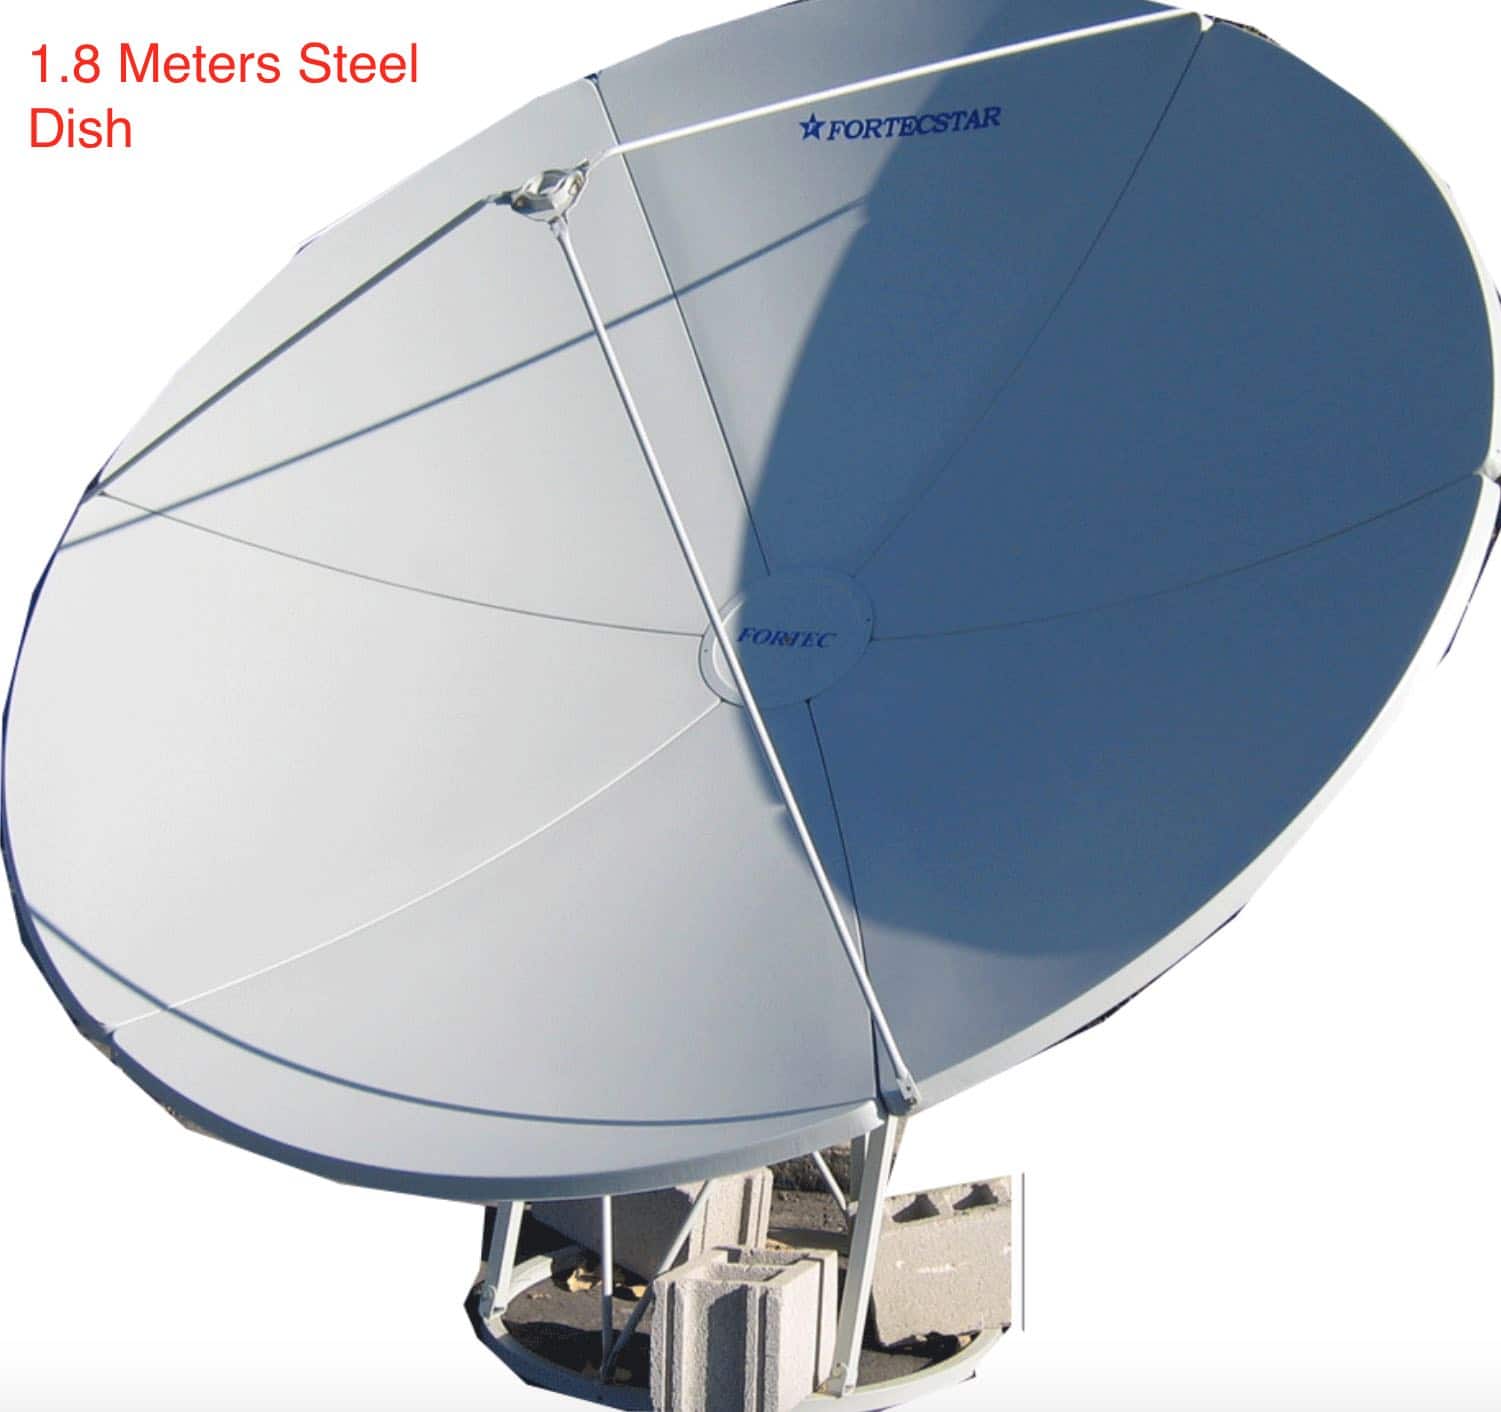 Satellite dish. Антенна спутниковая 120 см Supral. Антенна спутниковая Супрал 0.9 м. Параболическая антенна спутника. Спутник тарелка.